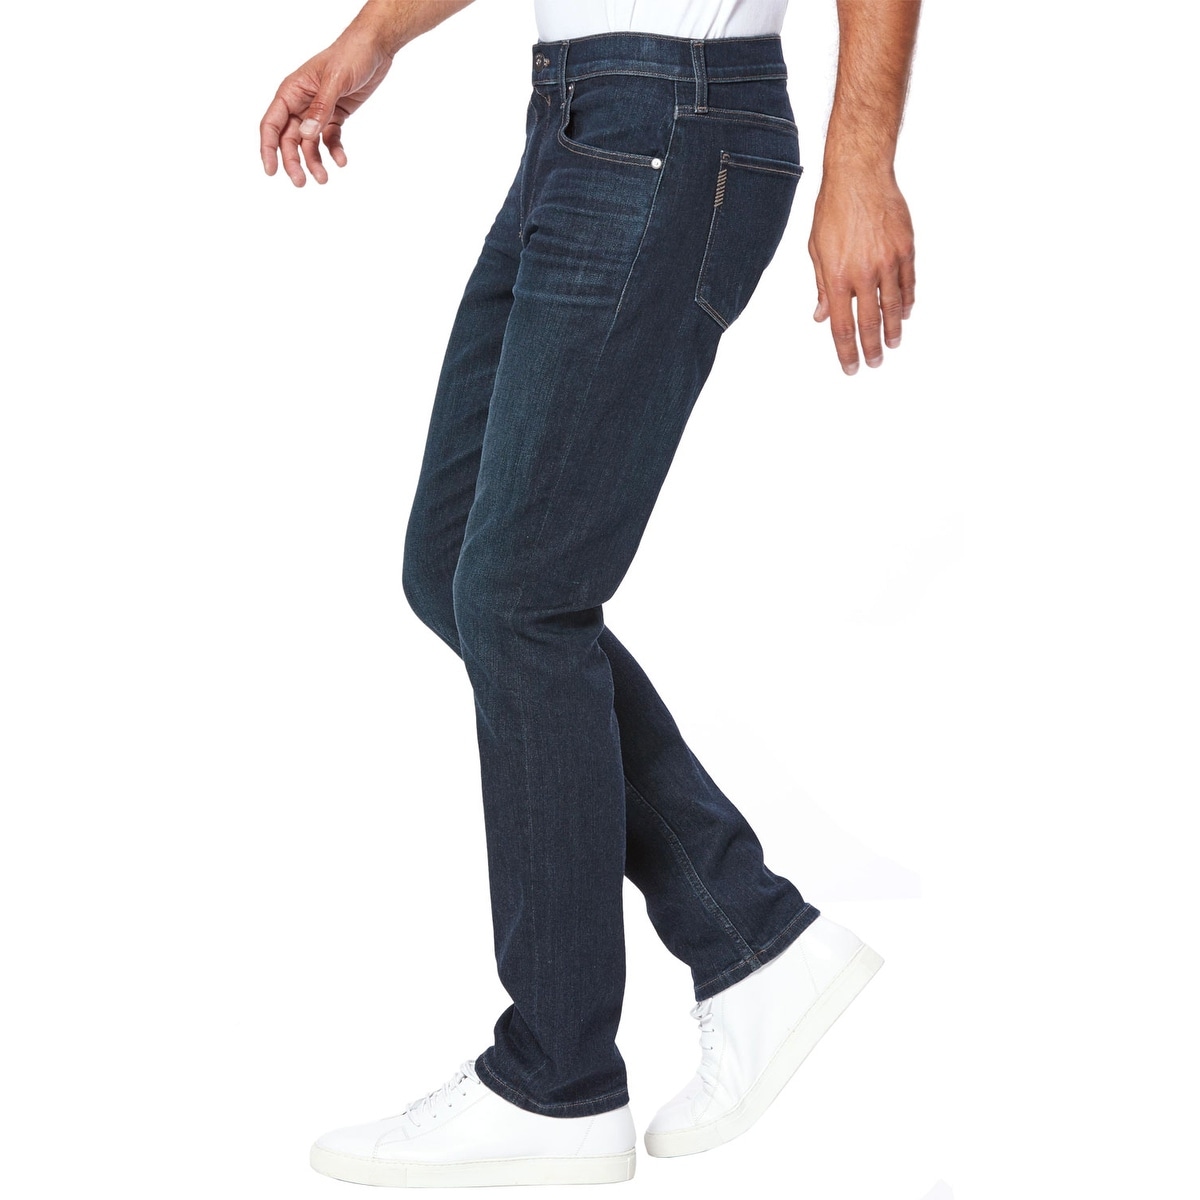 paige jeans federal mens